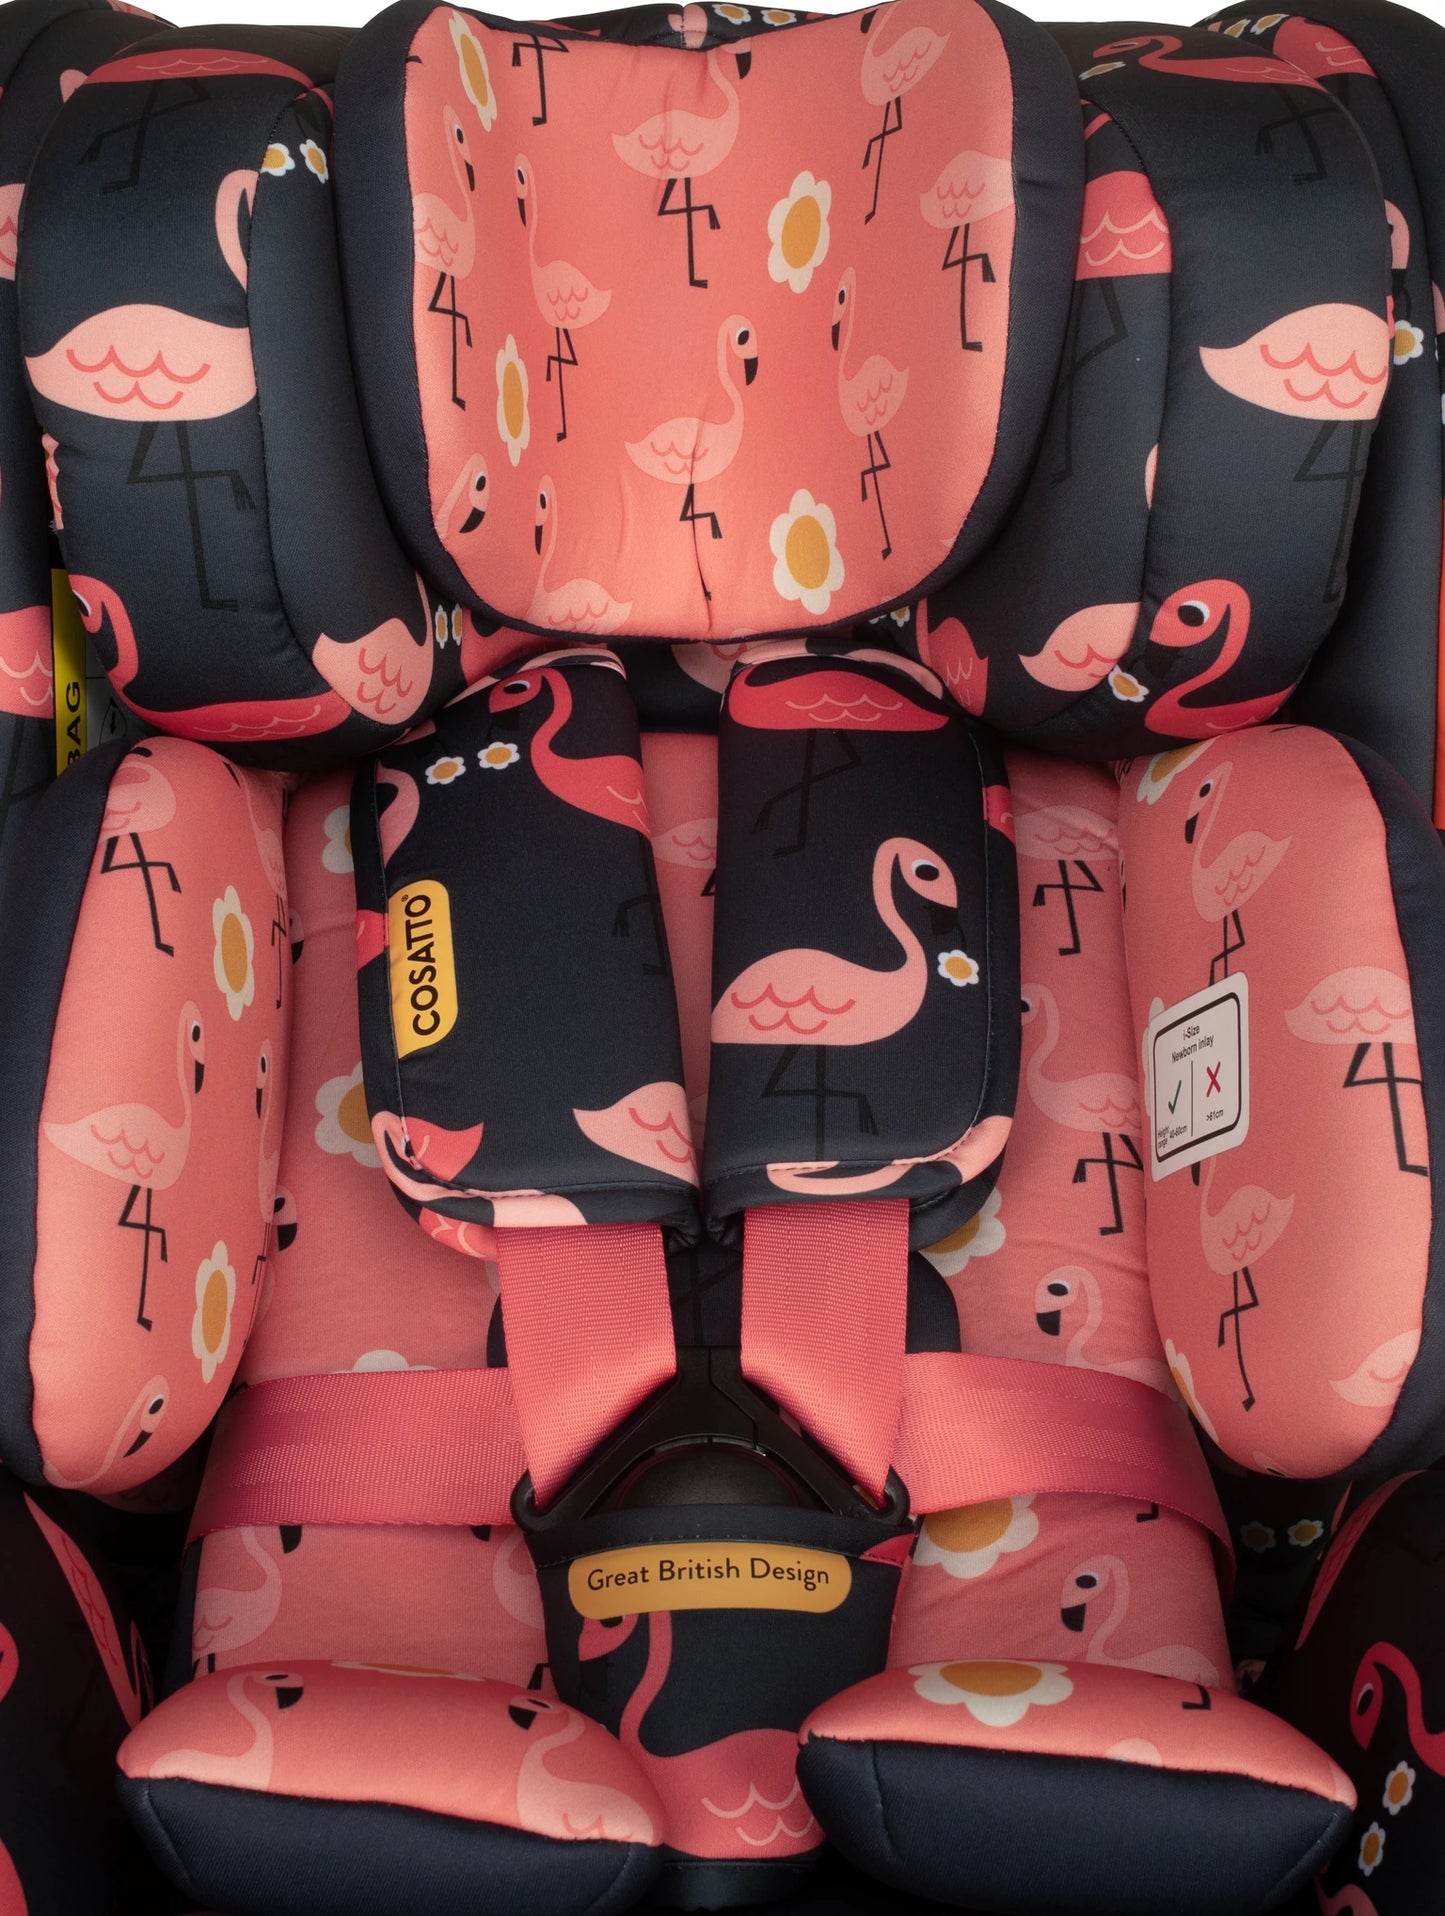 Cosatto RAC Come and Go i-size Rotate Car Seat -  Flamingo (5PP)